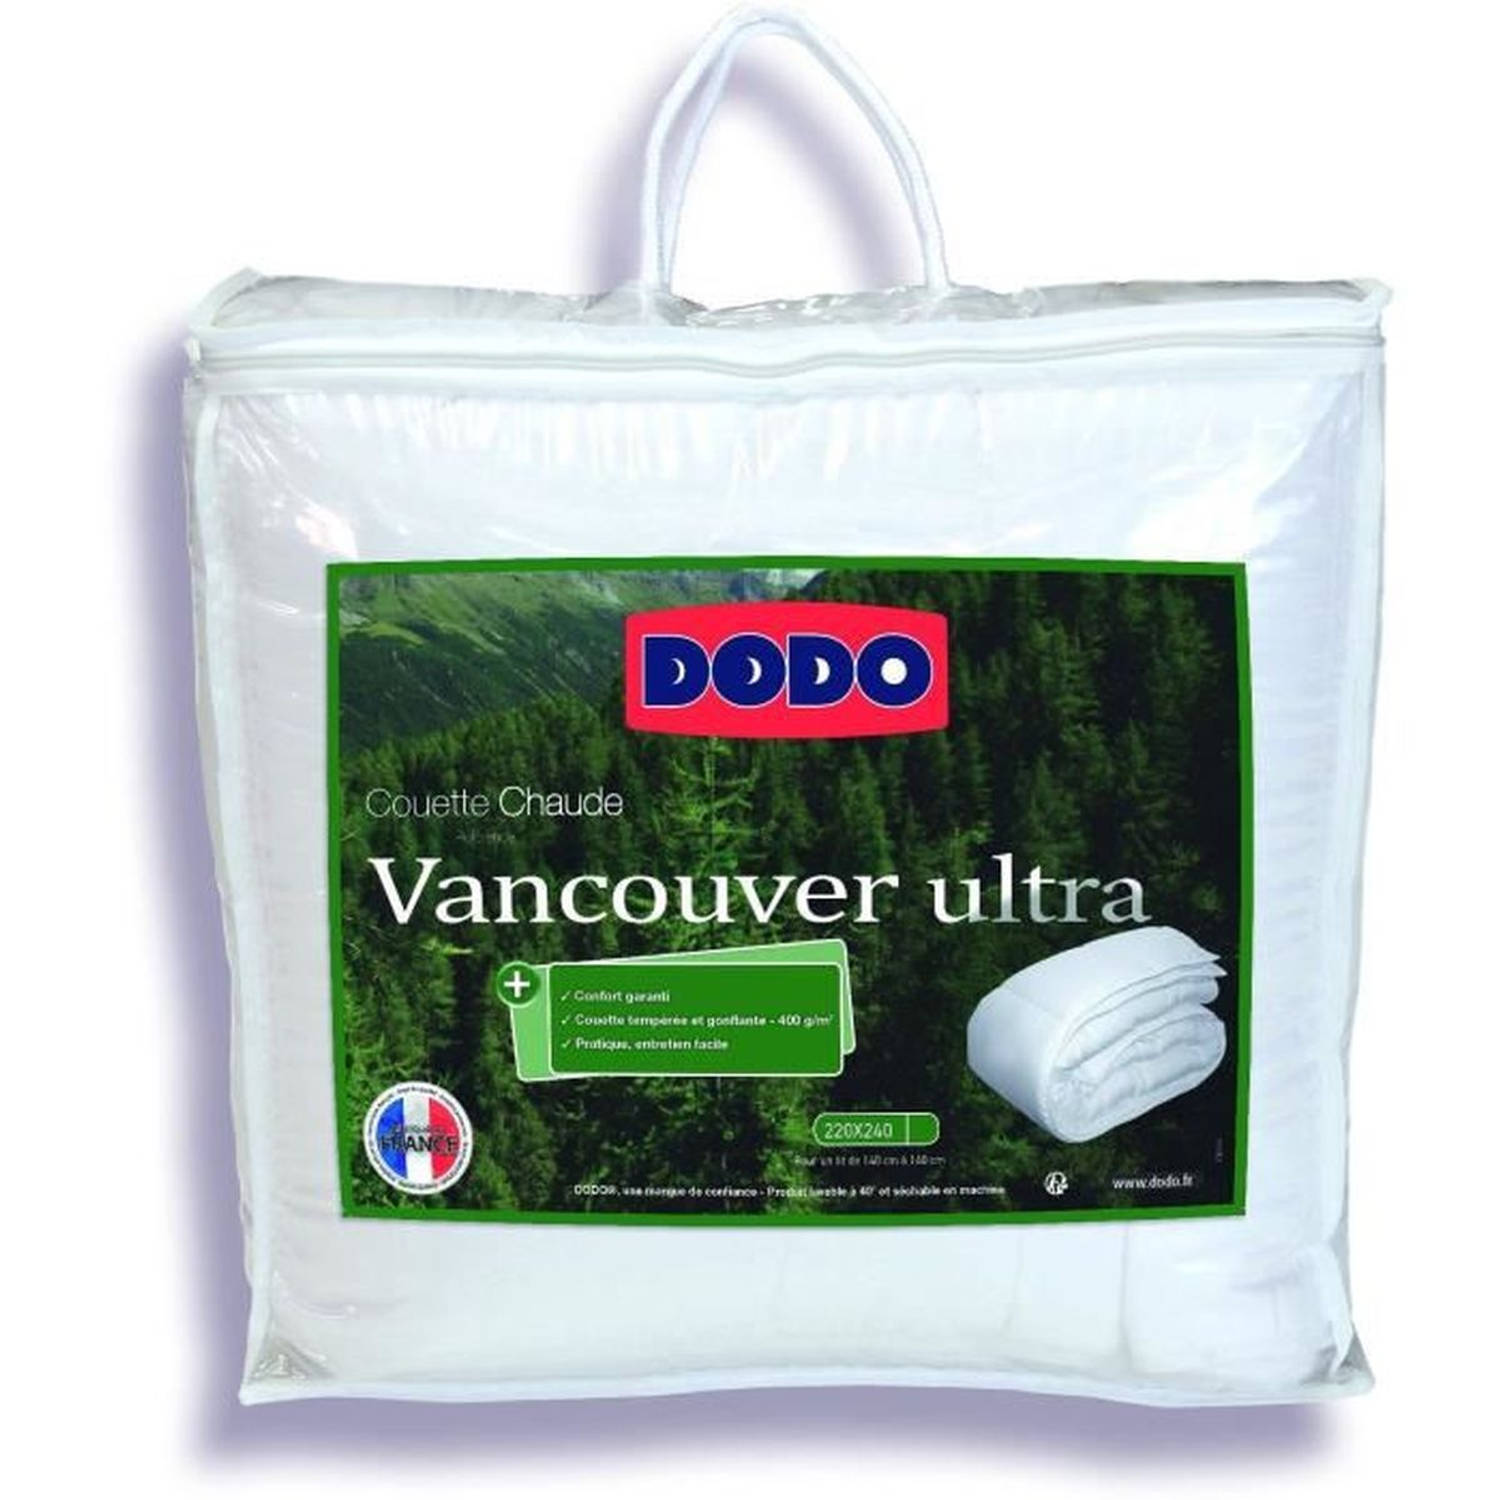 Vancouver Ultra gematigd dekbed - 220 x 240 cm - 300gr/m² - Wit - DODO